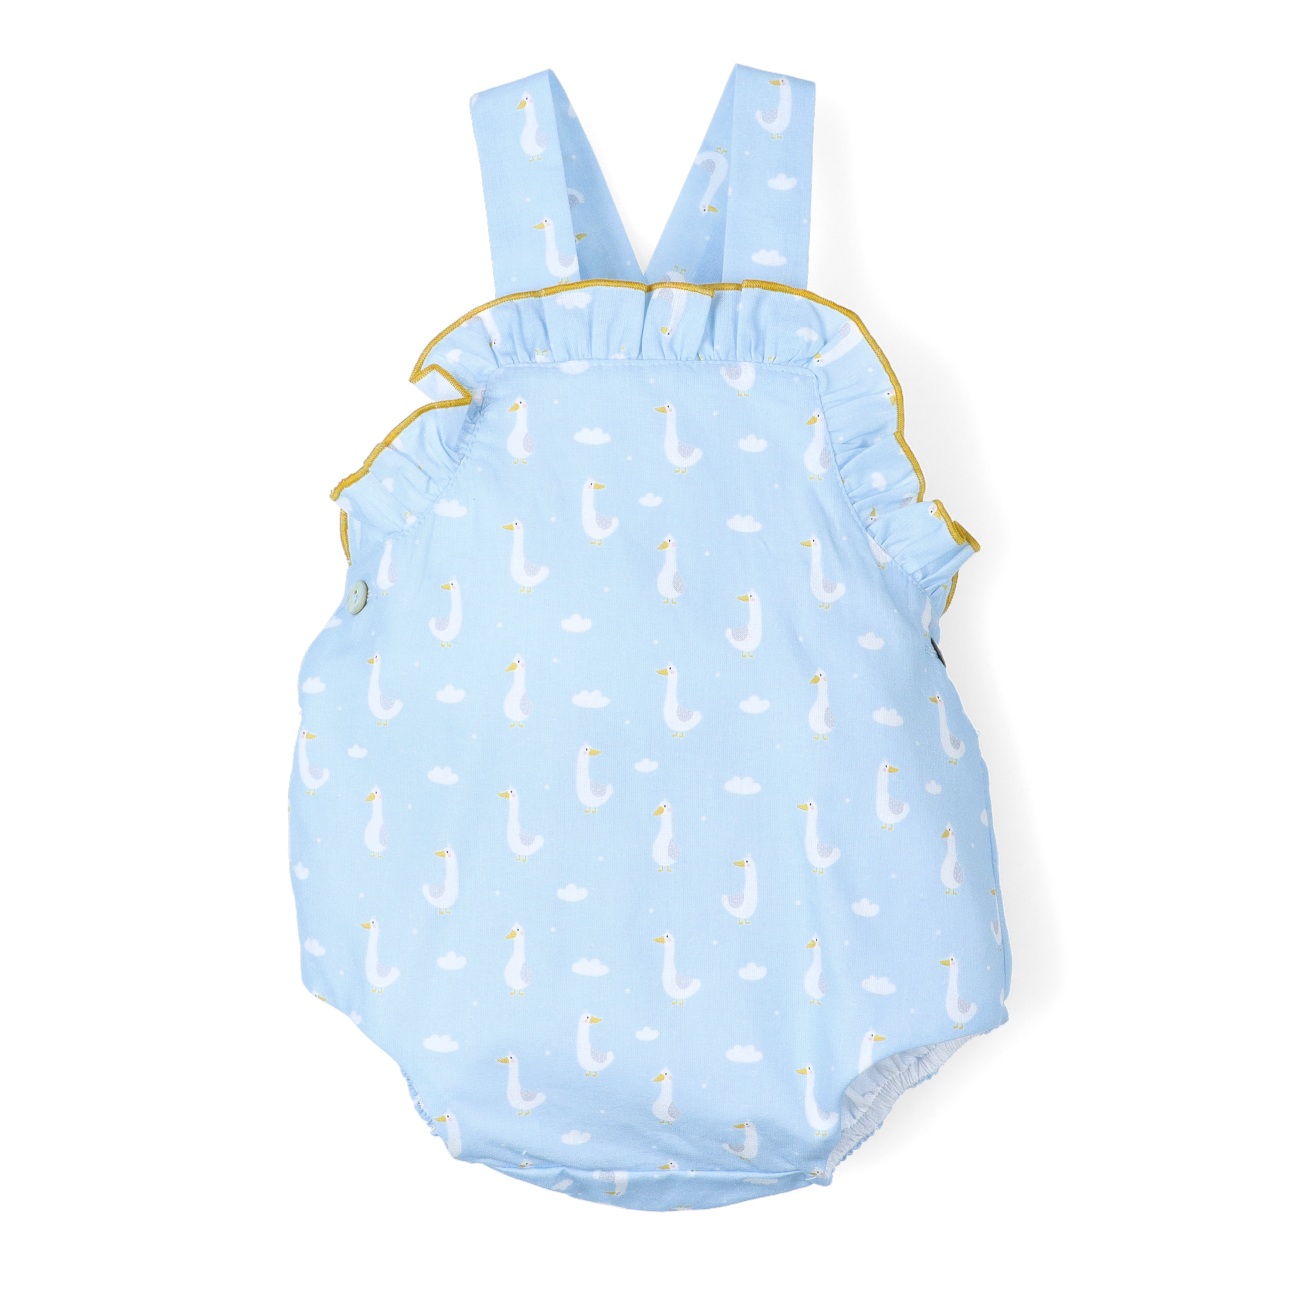 Portadocumentos azul de bebé personalizado de Tuc Tuc - Oh!Luna